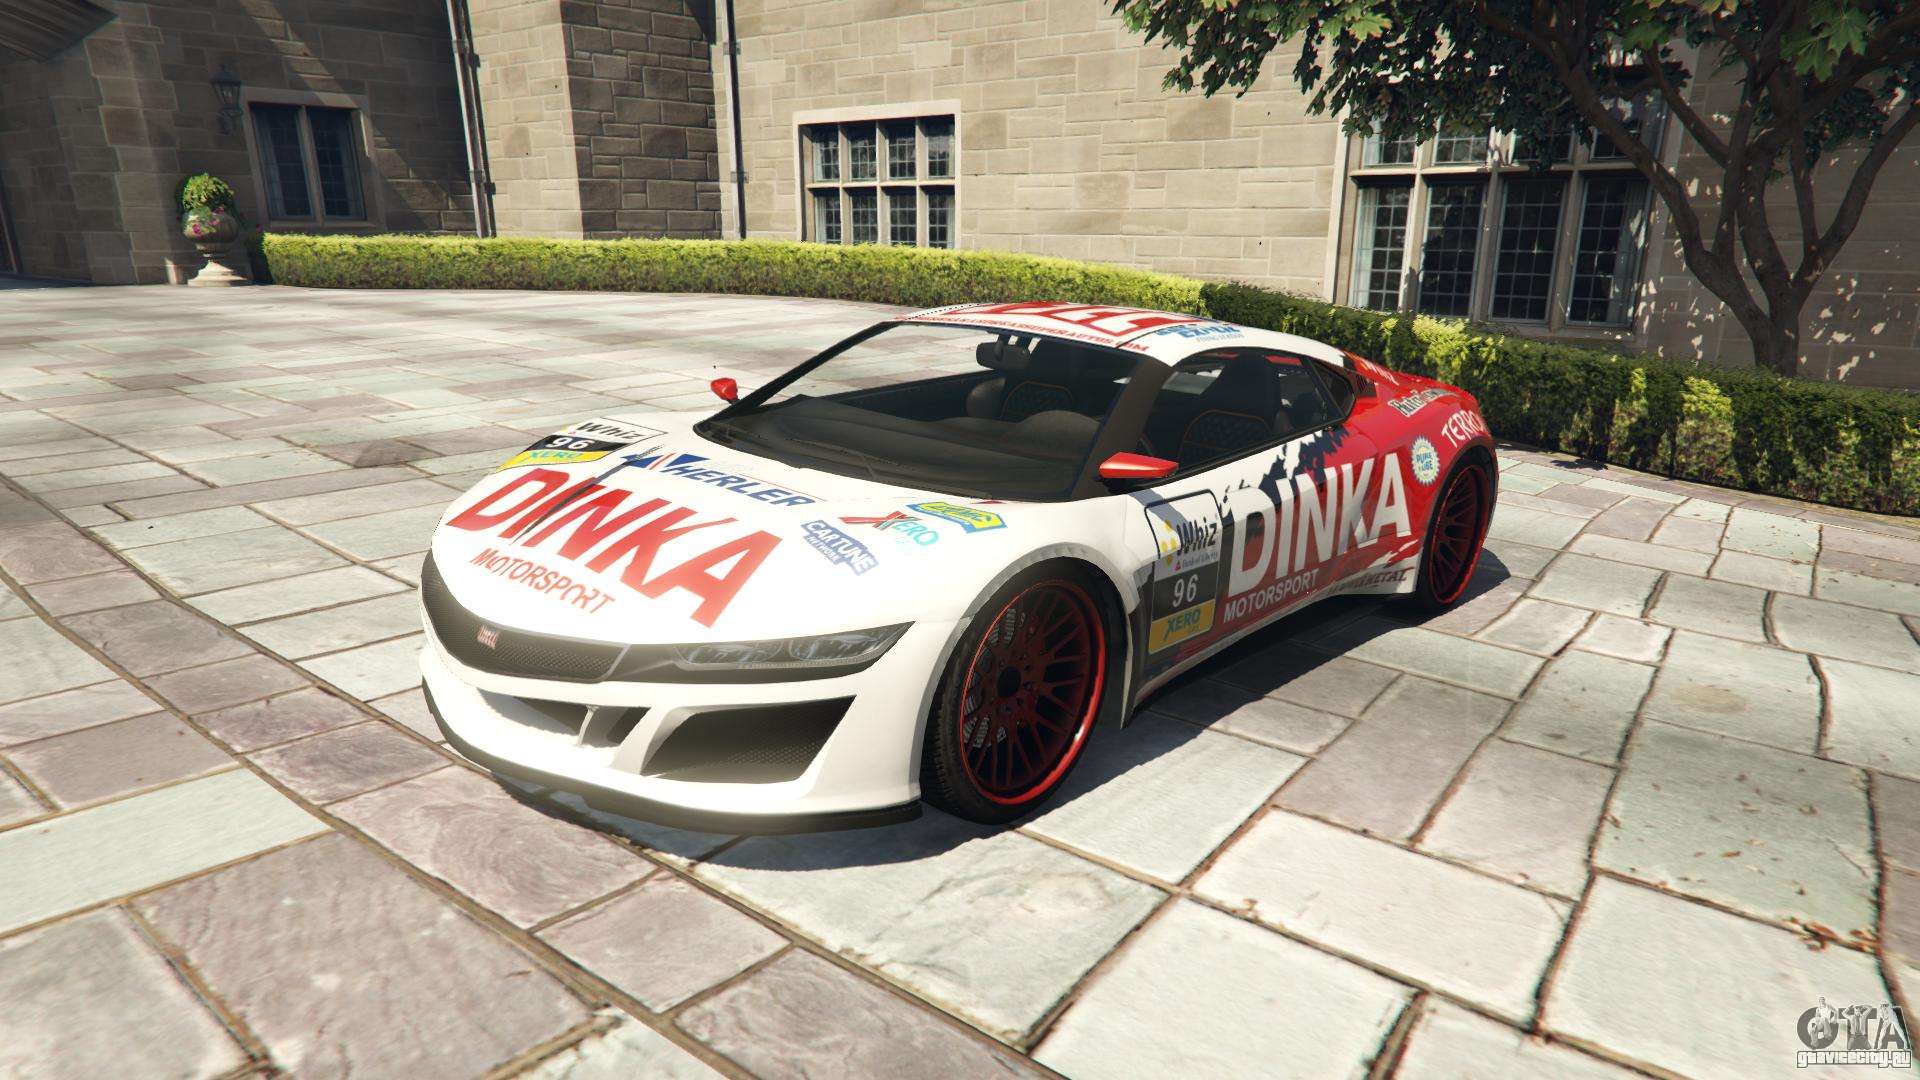 Dinka Jester Racecar из GTA 5 - вид спереди